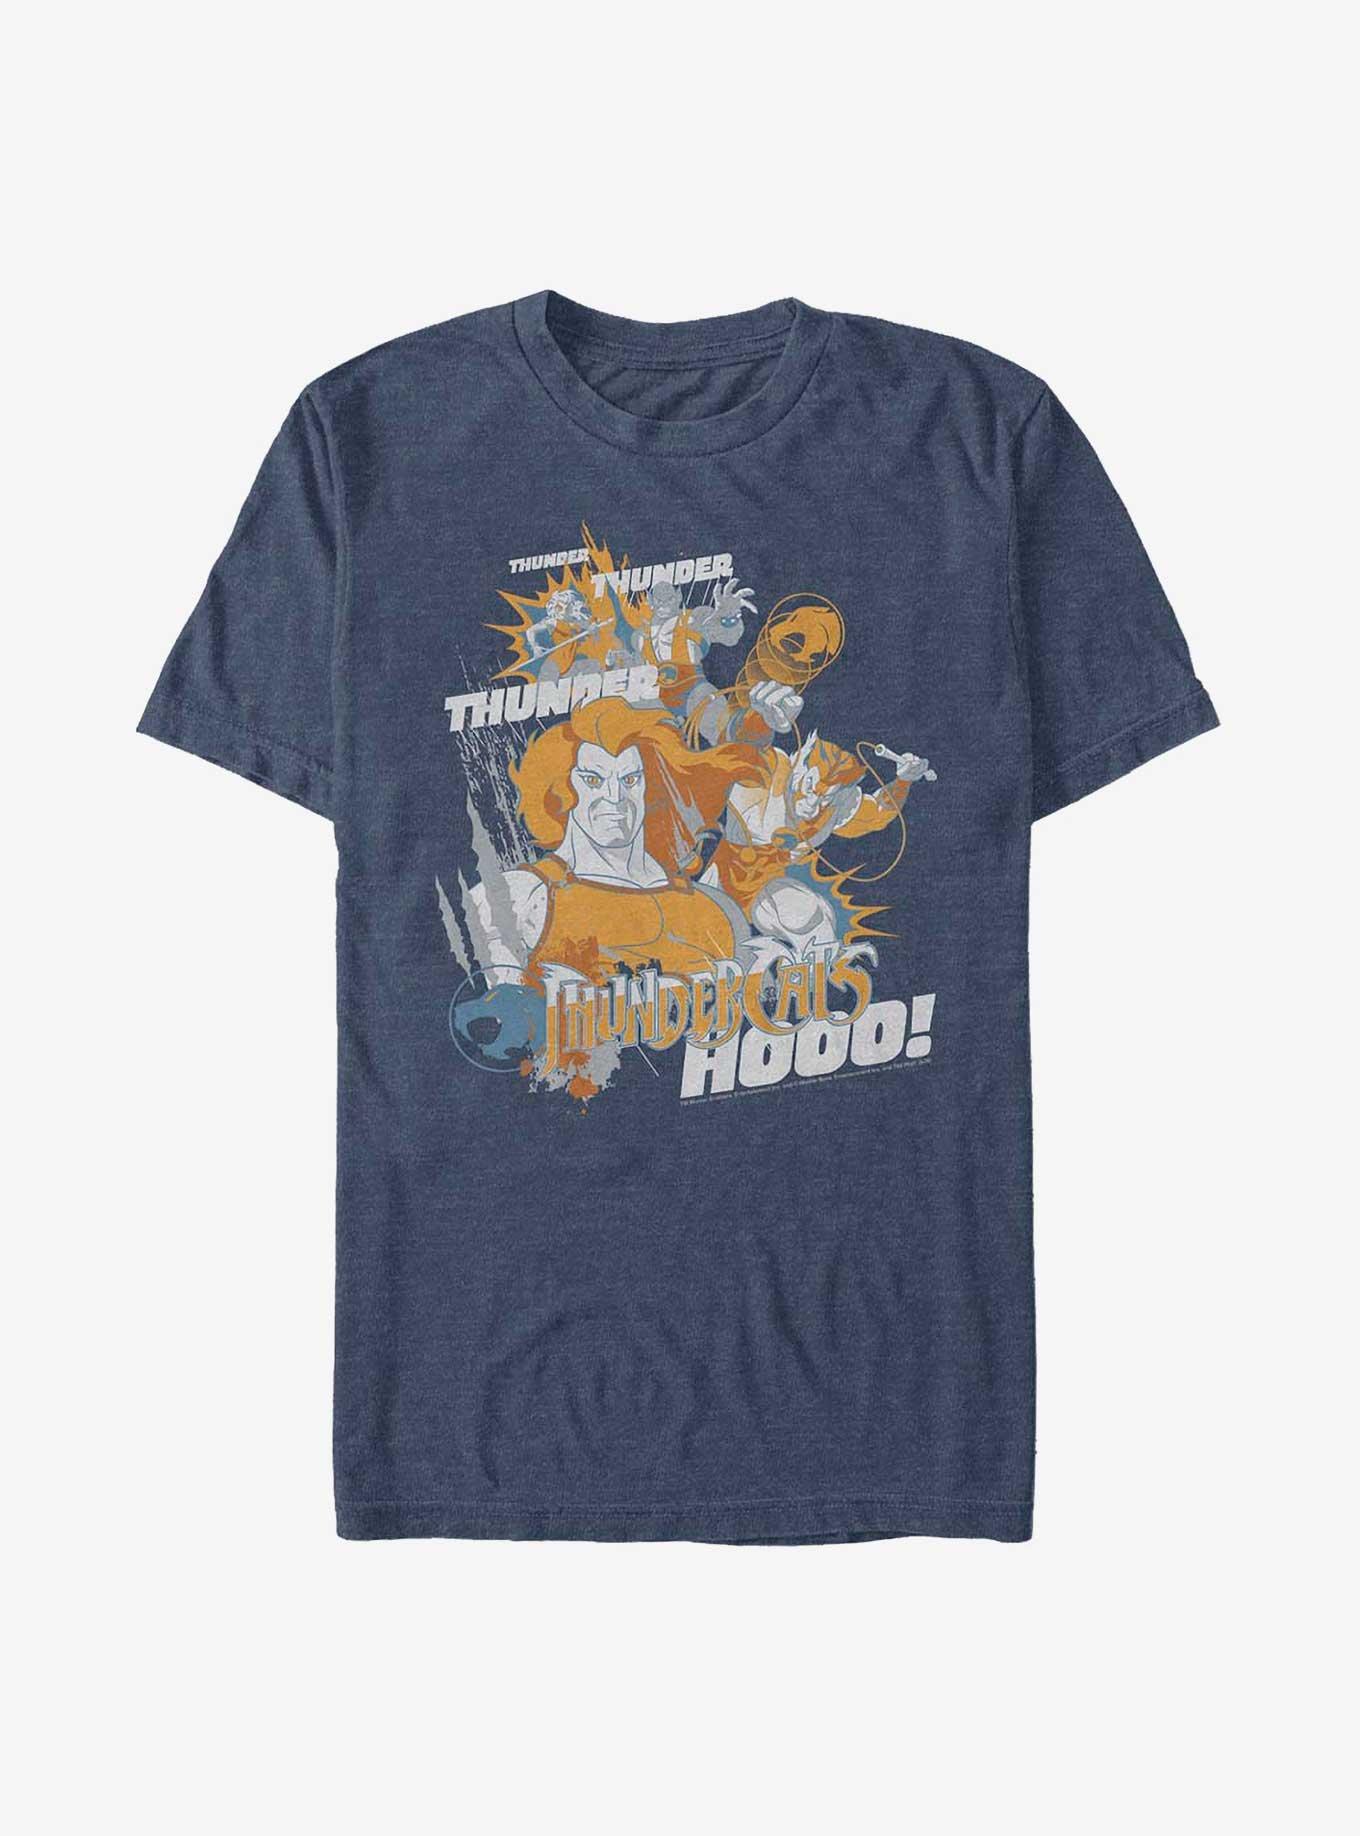 Thundercats Hooo T-Shirt, , hi-res